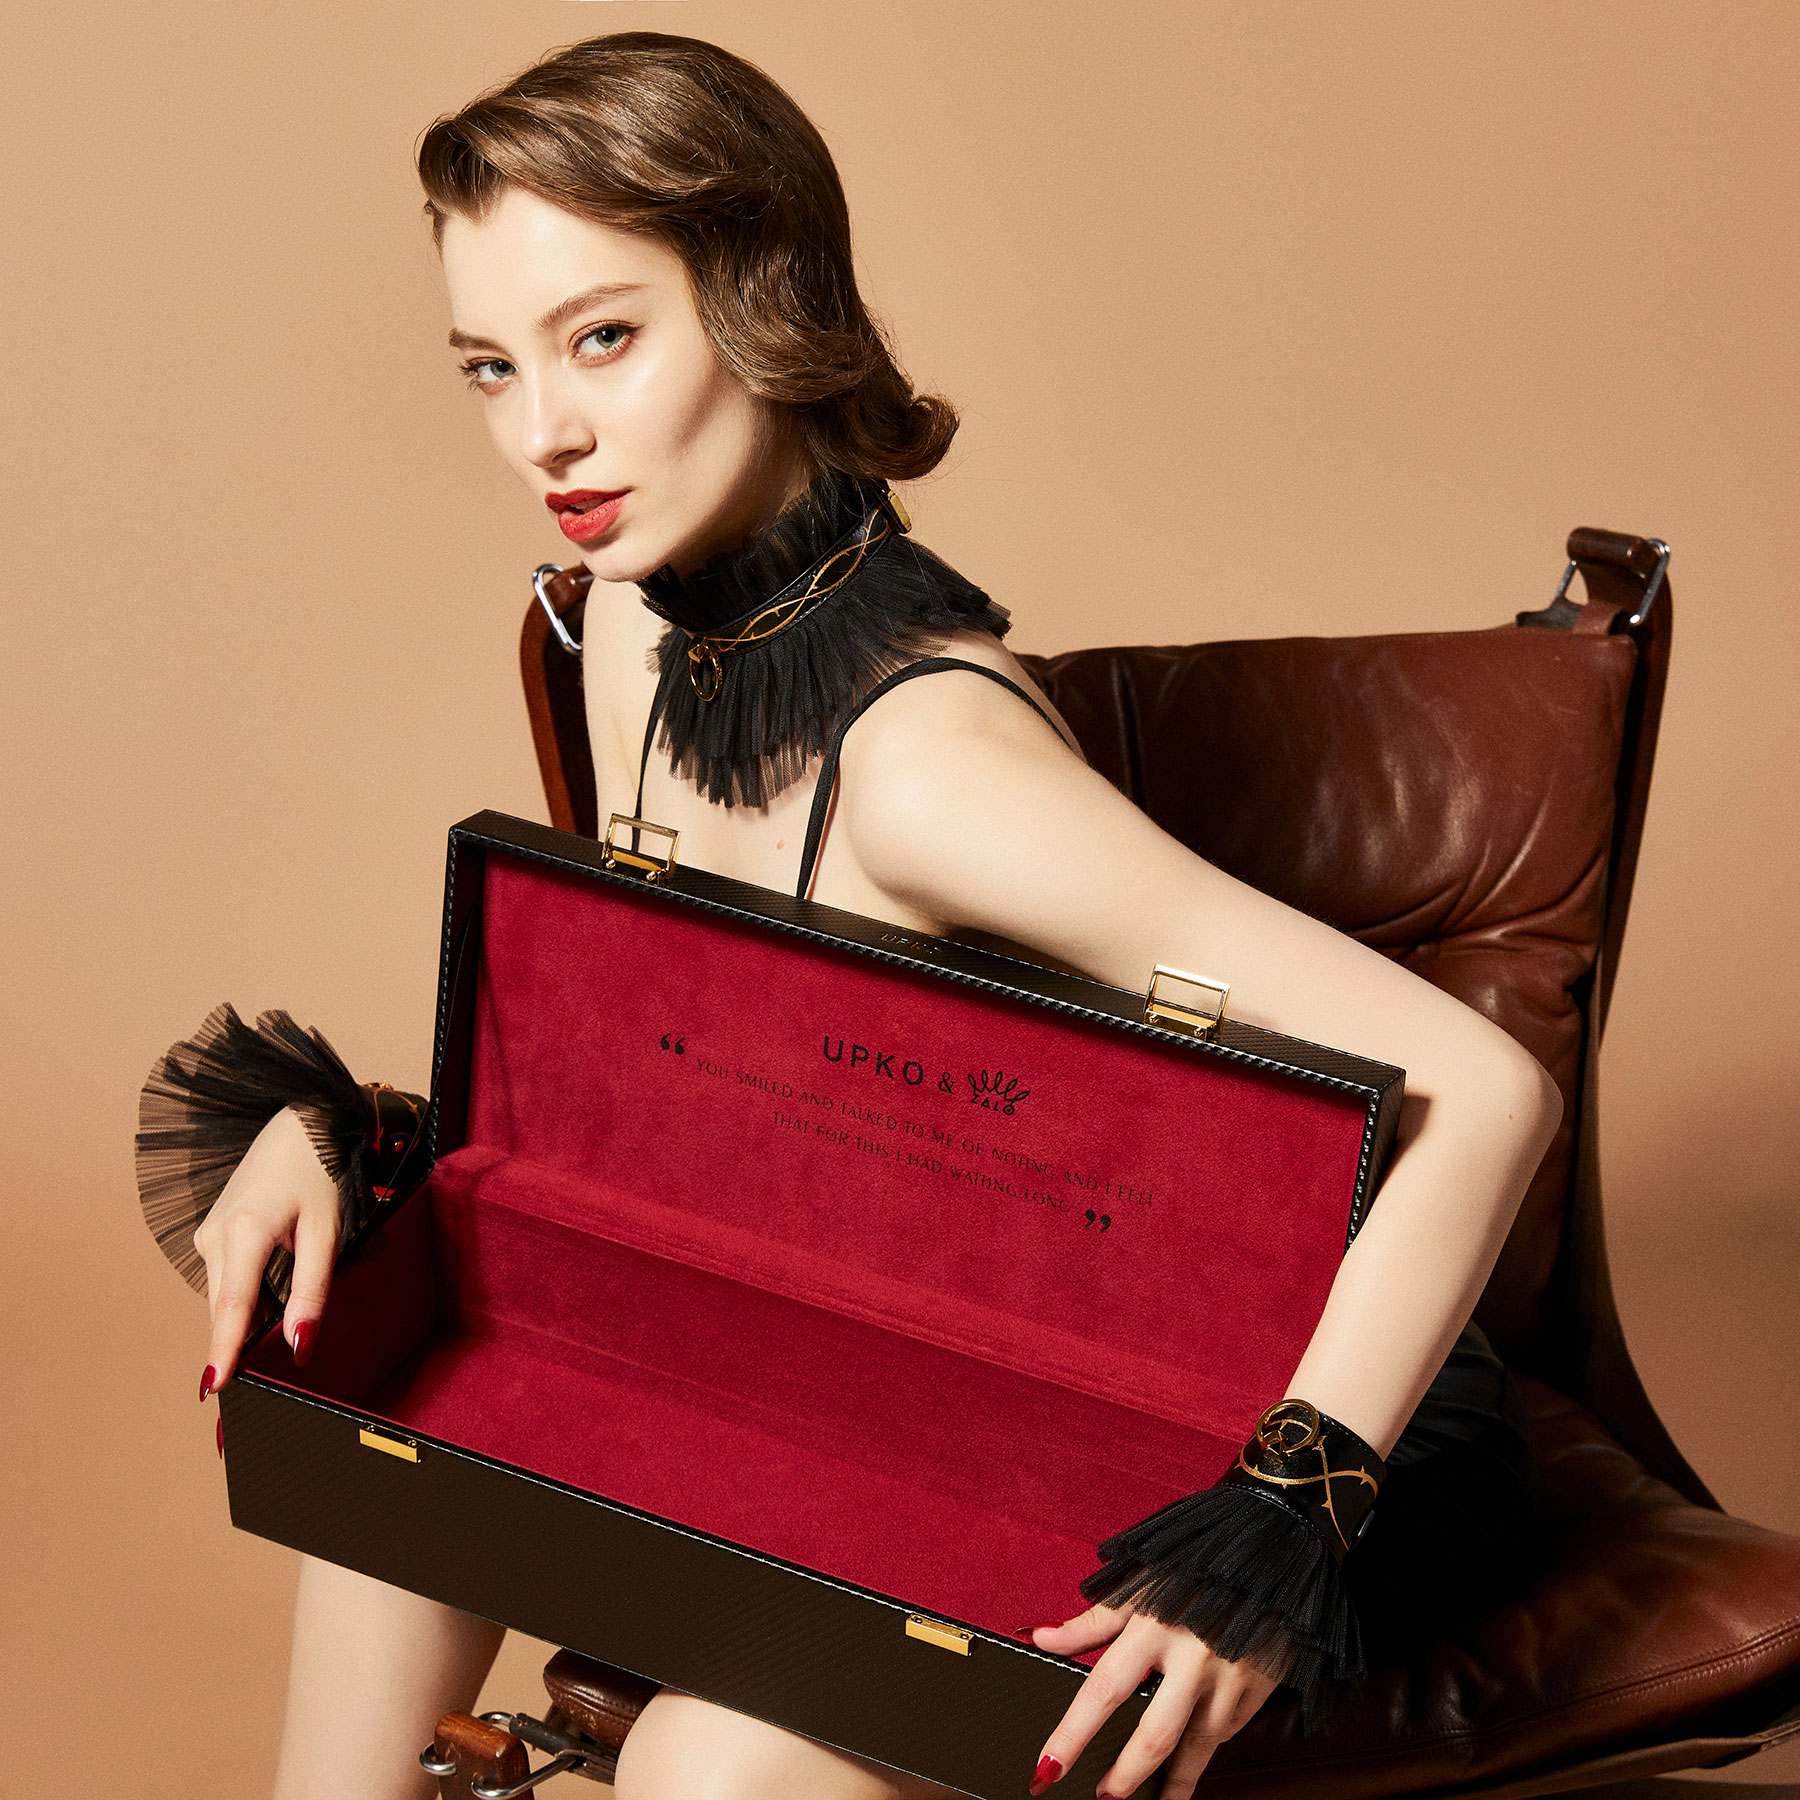 ZALO & UPKO Doll Designer Collection Luxurious & Romantic Bondage Play Kit Storage Case Displayed With Model 2